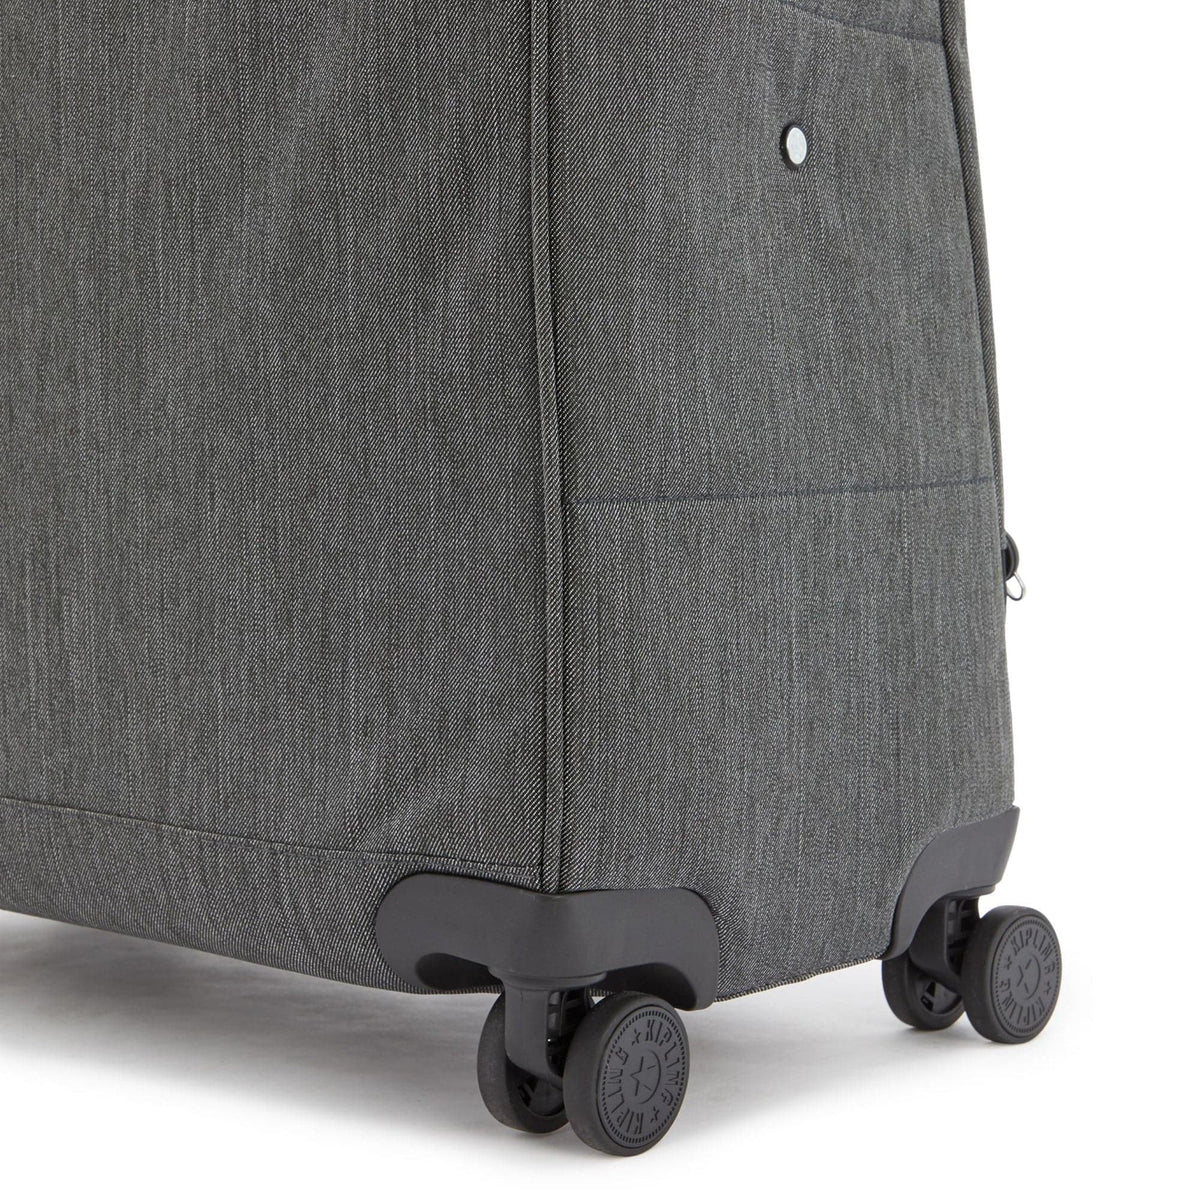 Kipling City Spinner Large 4-Wheeled Expandable Trolley Bag